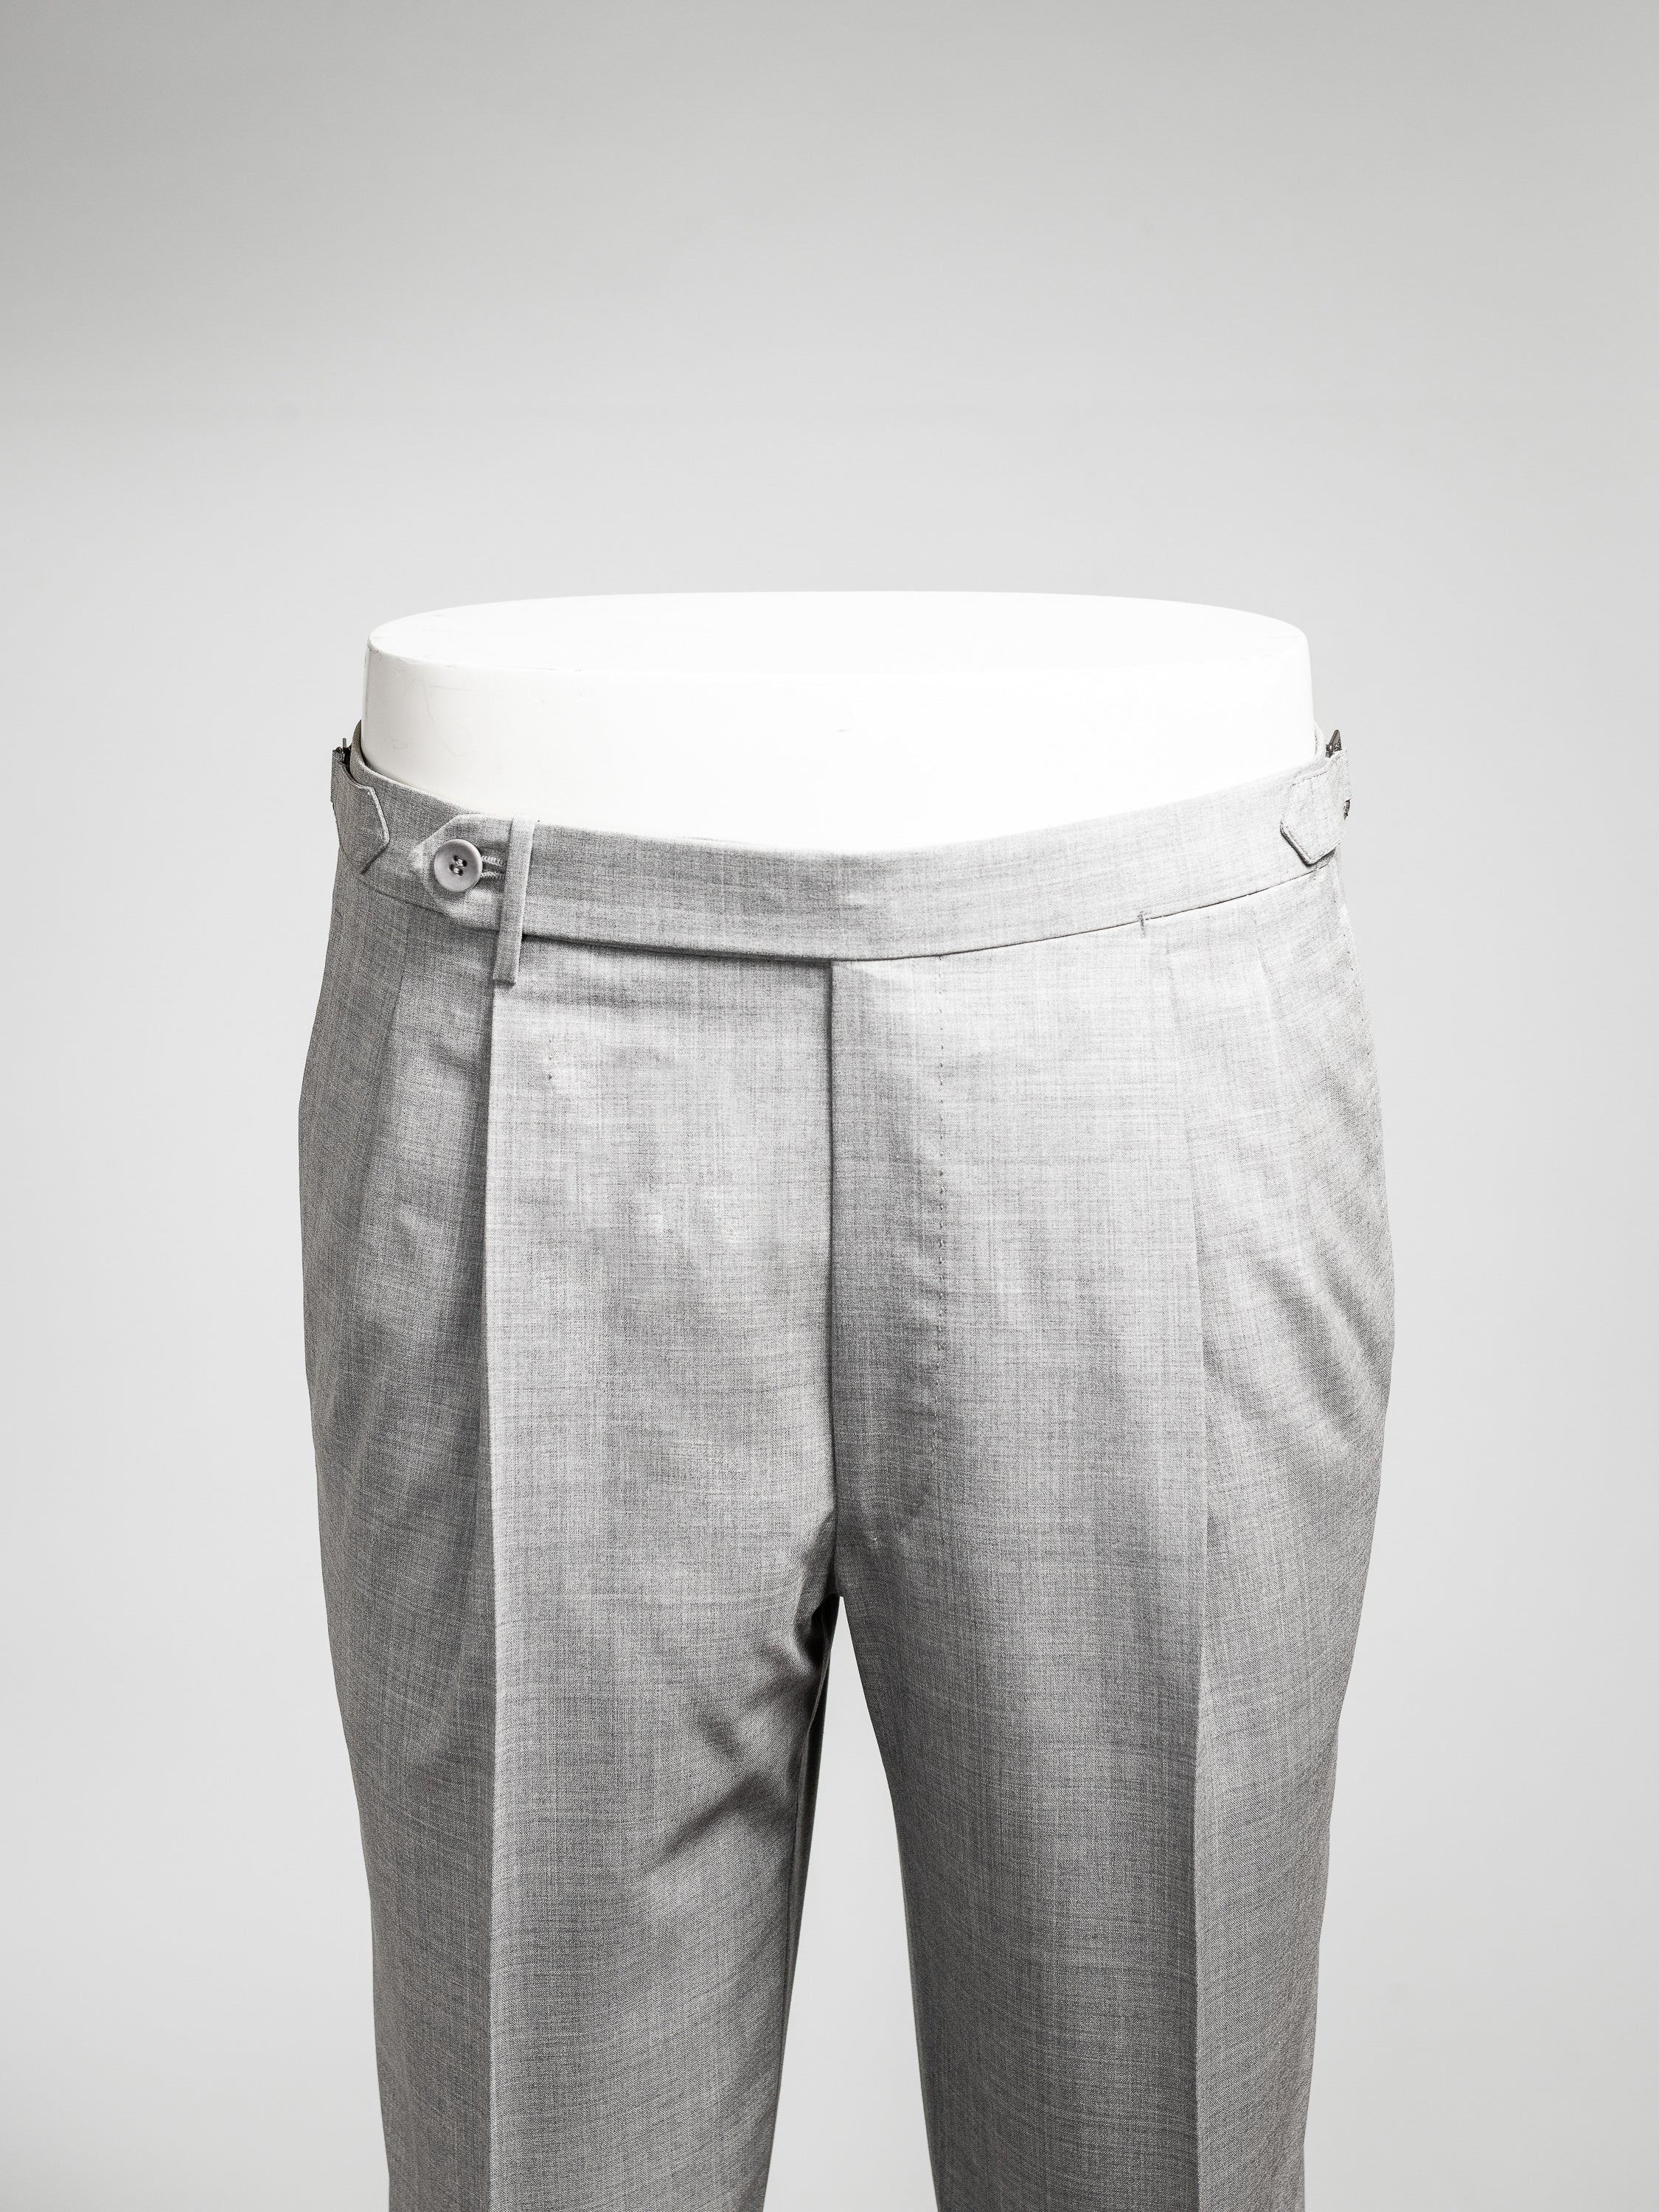 Men's Pants, Gretna Slate Grey Tropical Wool Trousers